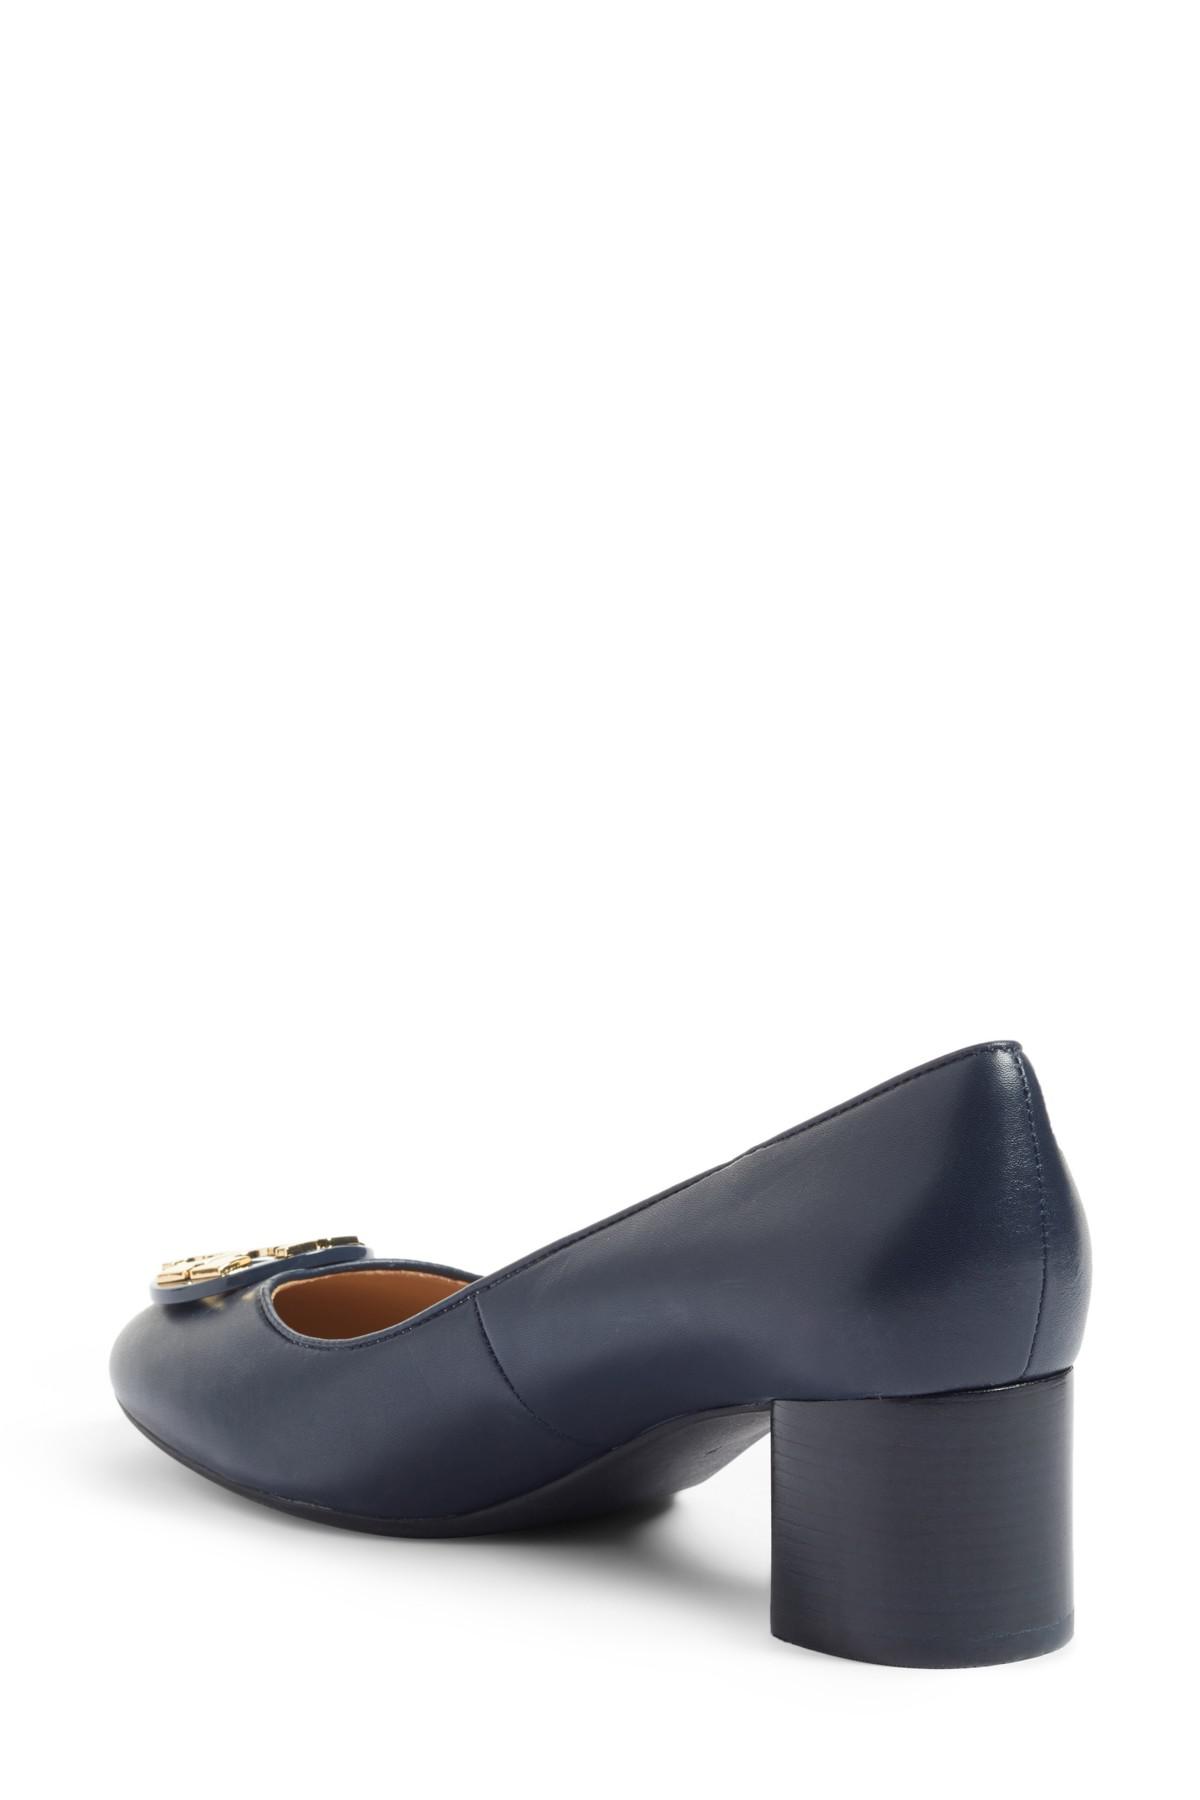 tory burch navy blue heels